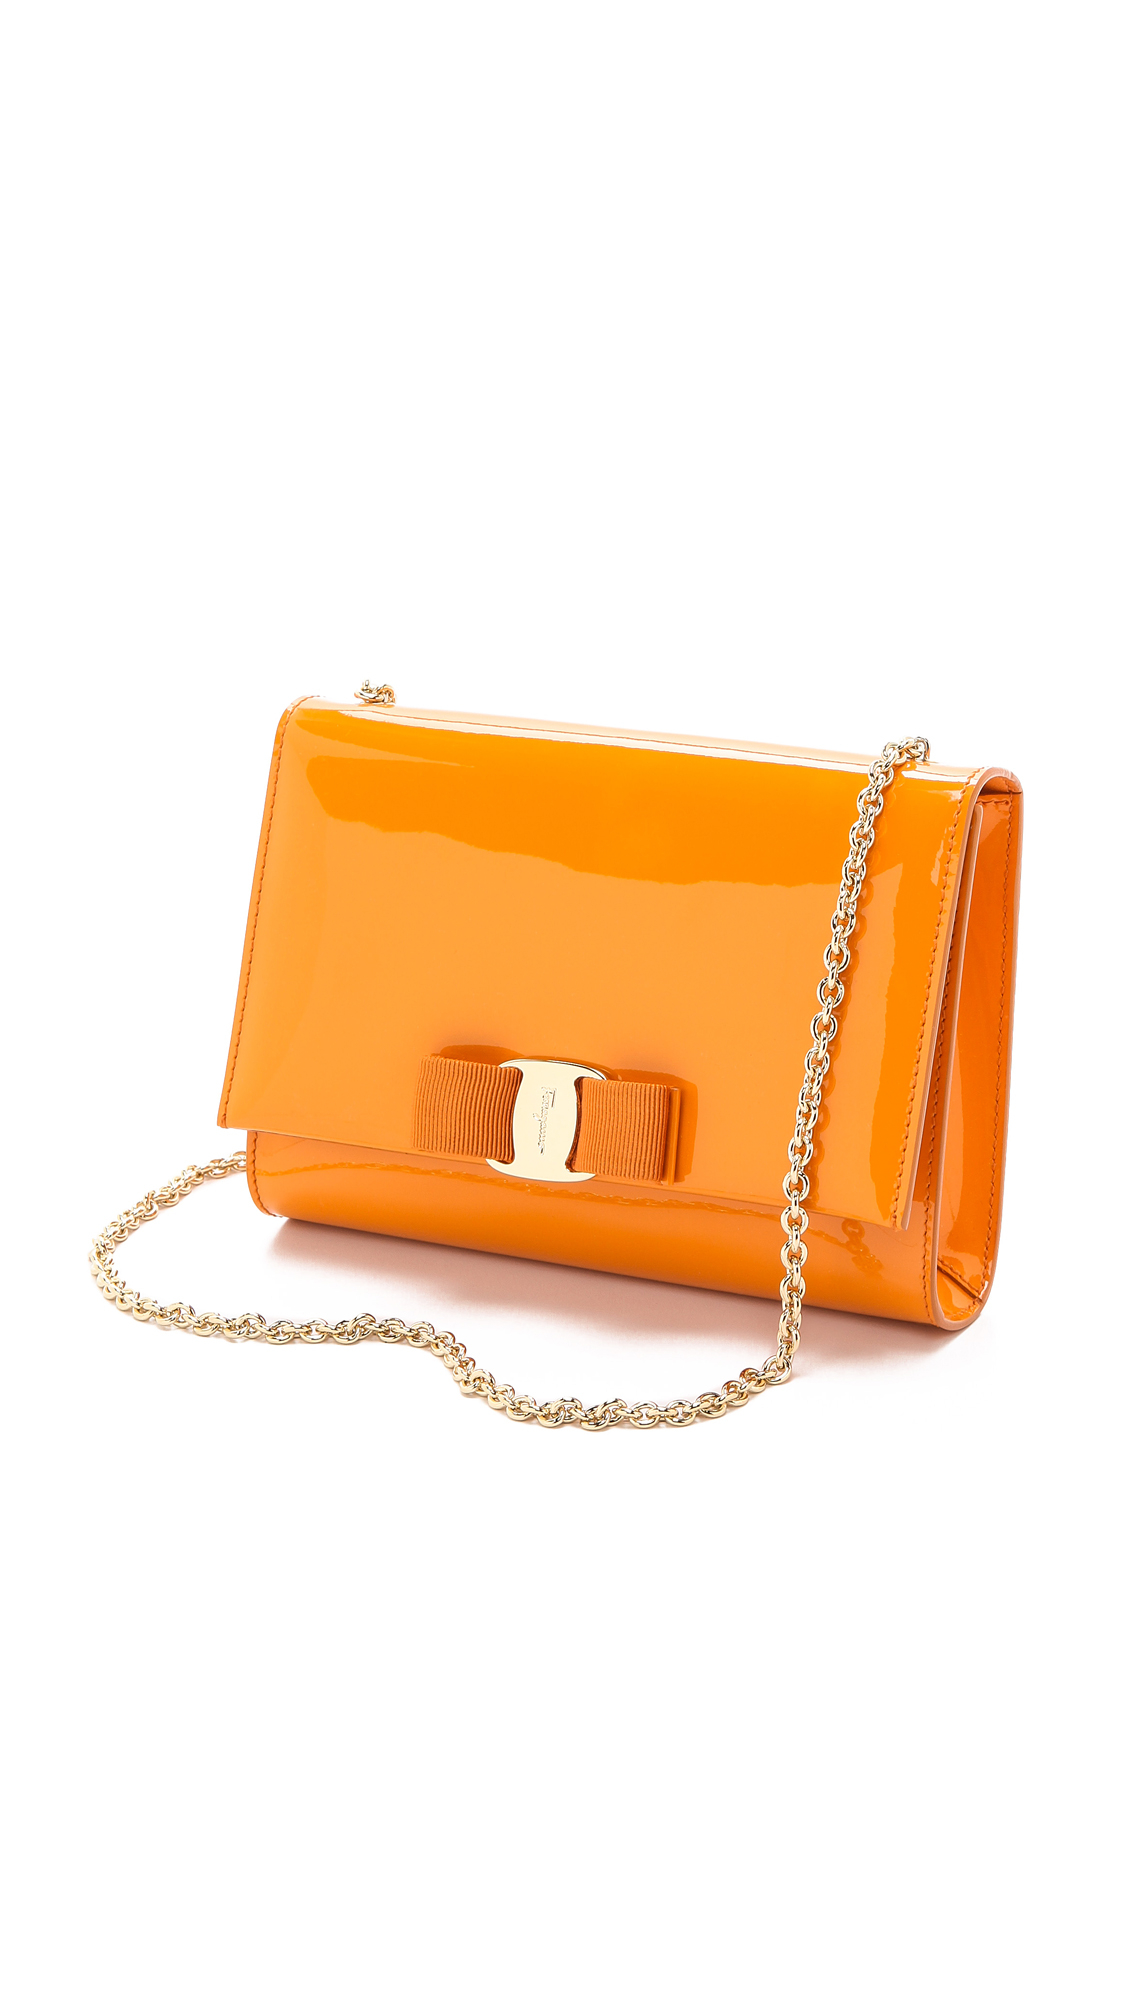 Ferragamo Miss Vara Bow Patent Shoulder Bag in Orange - Lyst